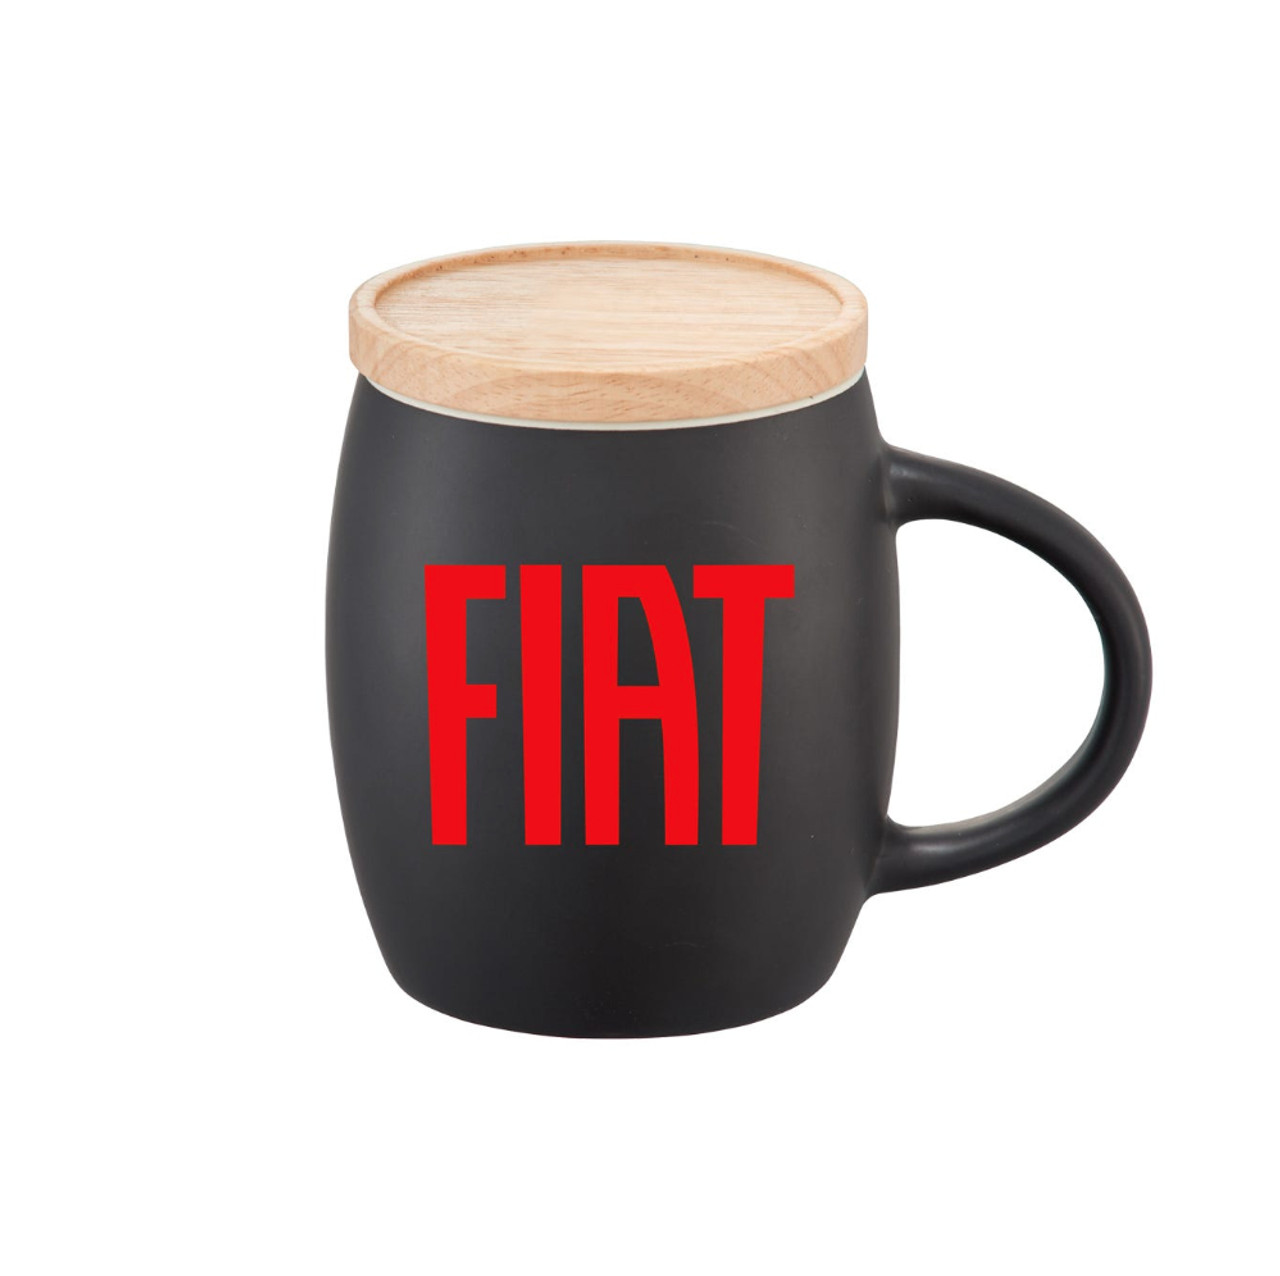 FIAT coffee cup or mug
Auto Ricambi
1AC113